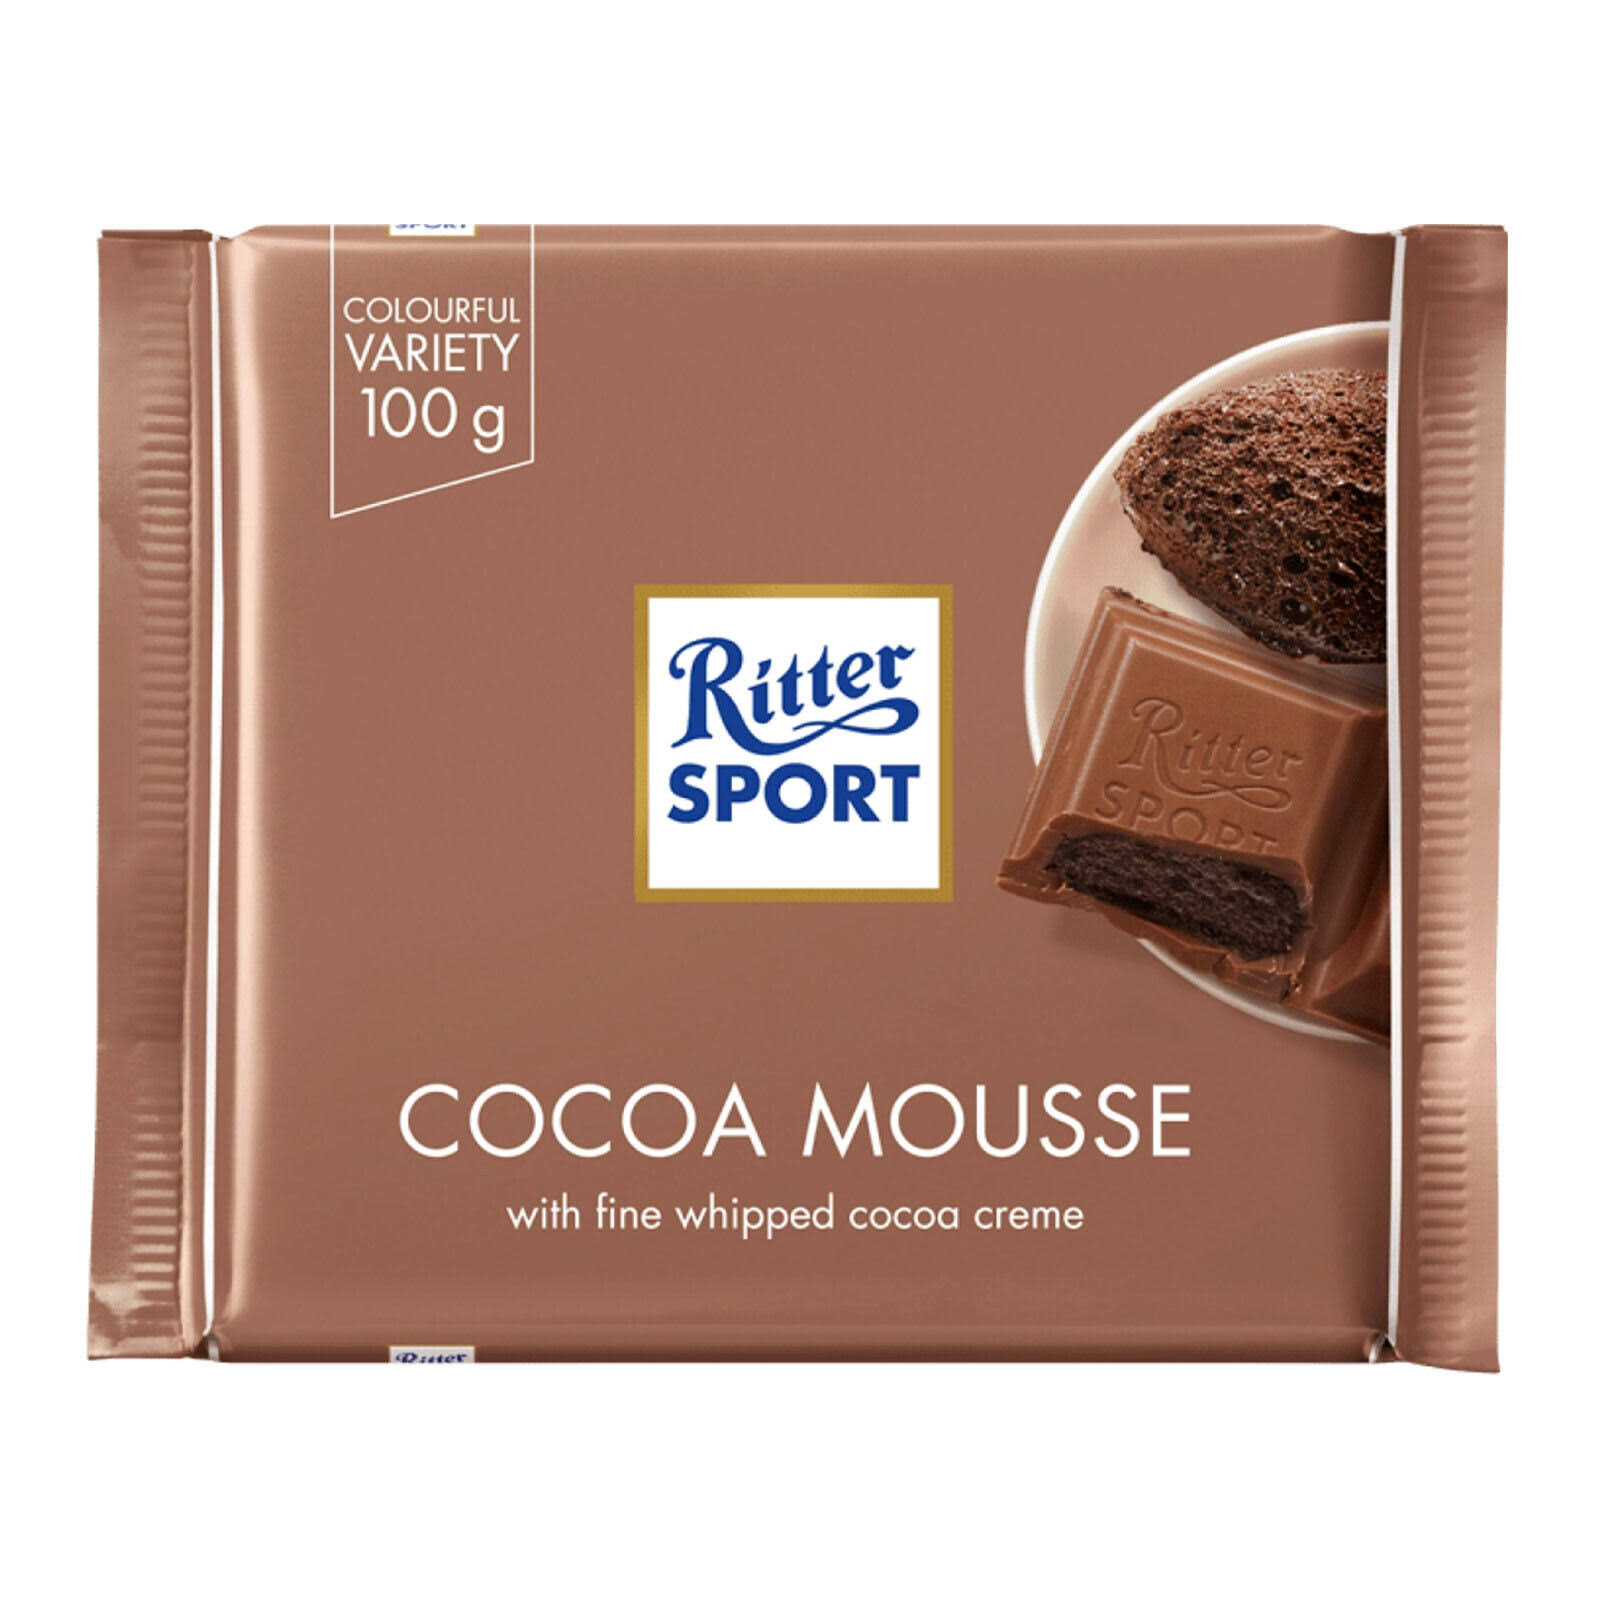 Ritter Sport Alpine Milk Chocolate - Cocoa Mousse, 100g